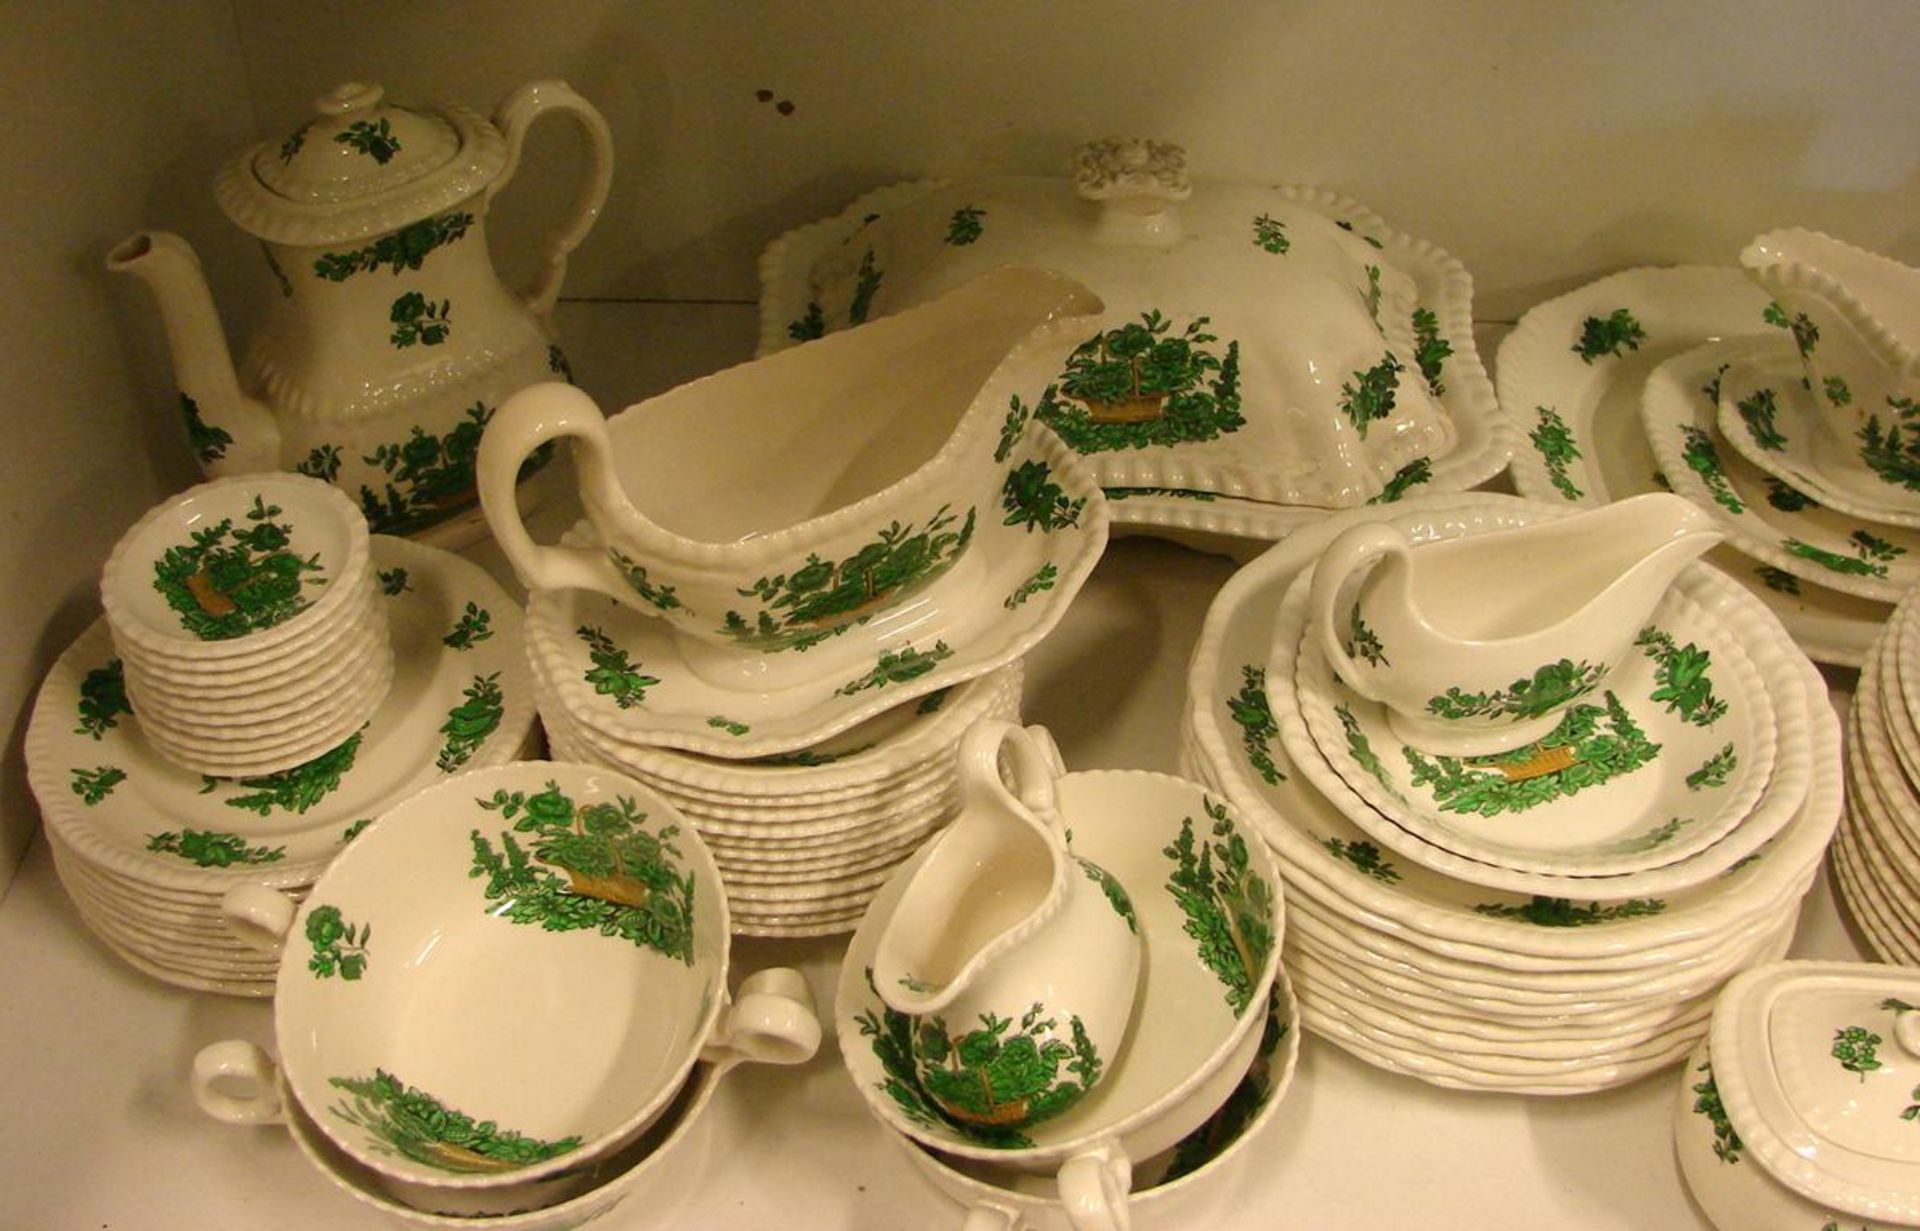 Geschirr, Copeland "Spode", England, insgesamt 79 Teile: 1 Tee/Kaffeekanne, 2 Milchkännchen, 12